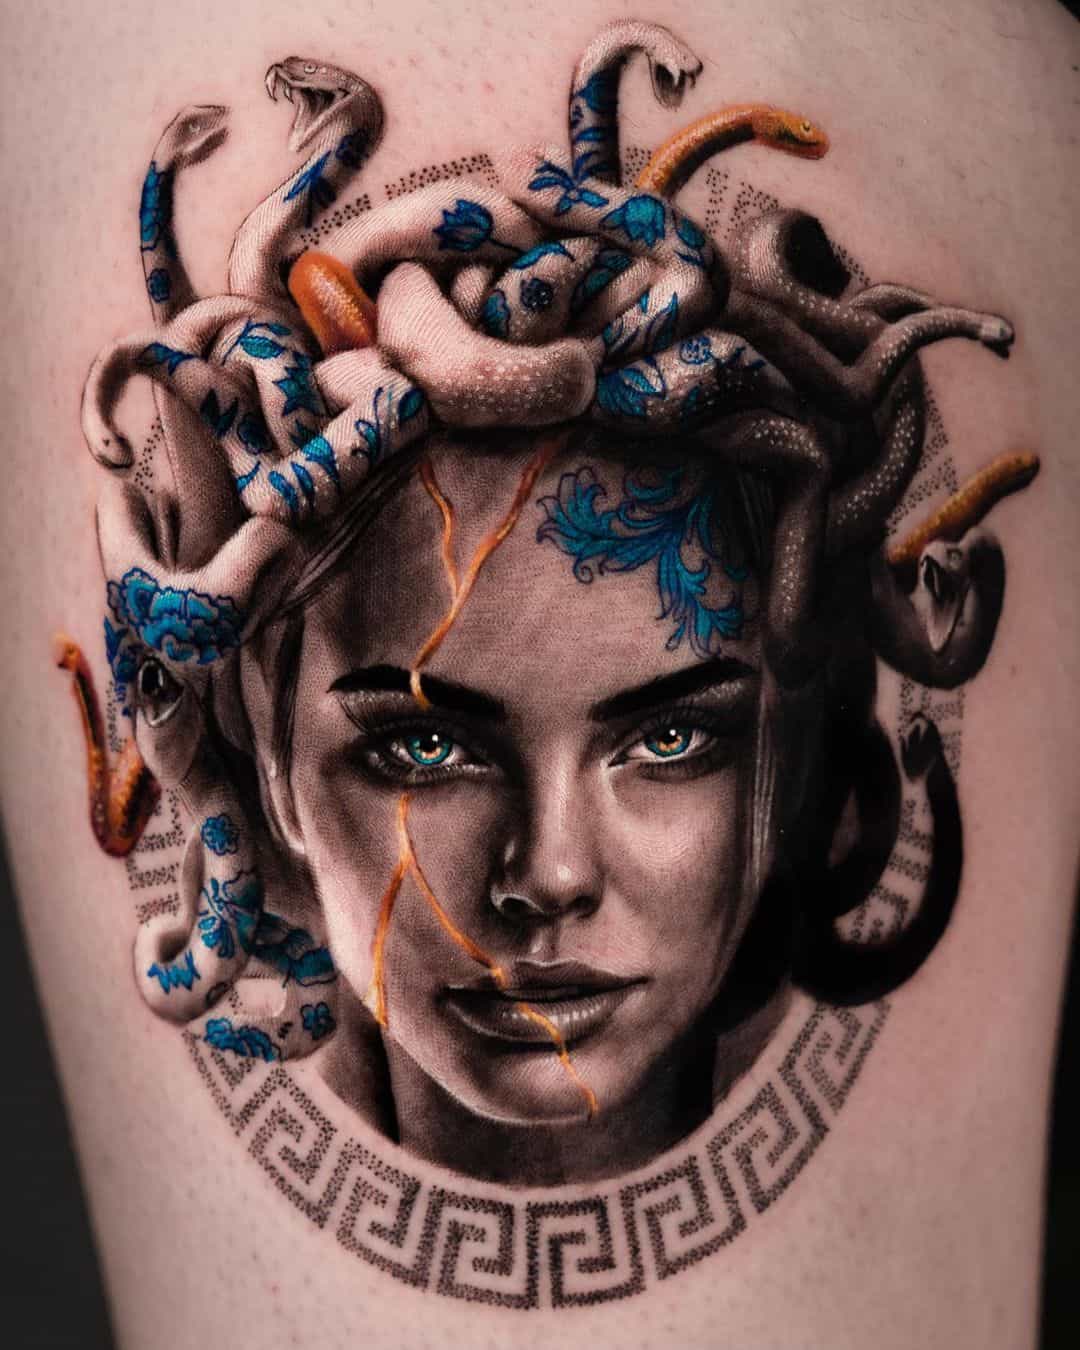 Medusa tattoo by shalevstorm